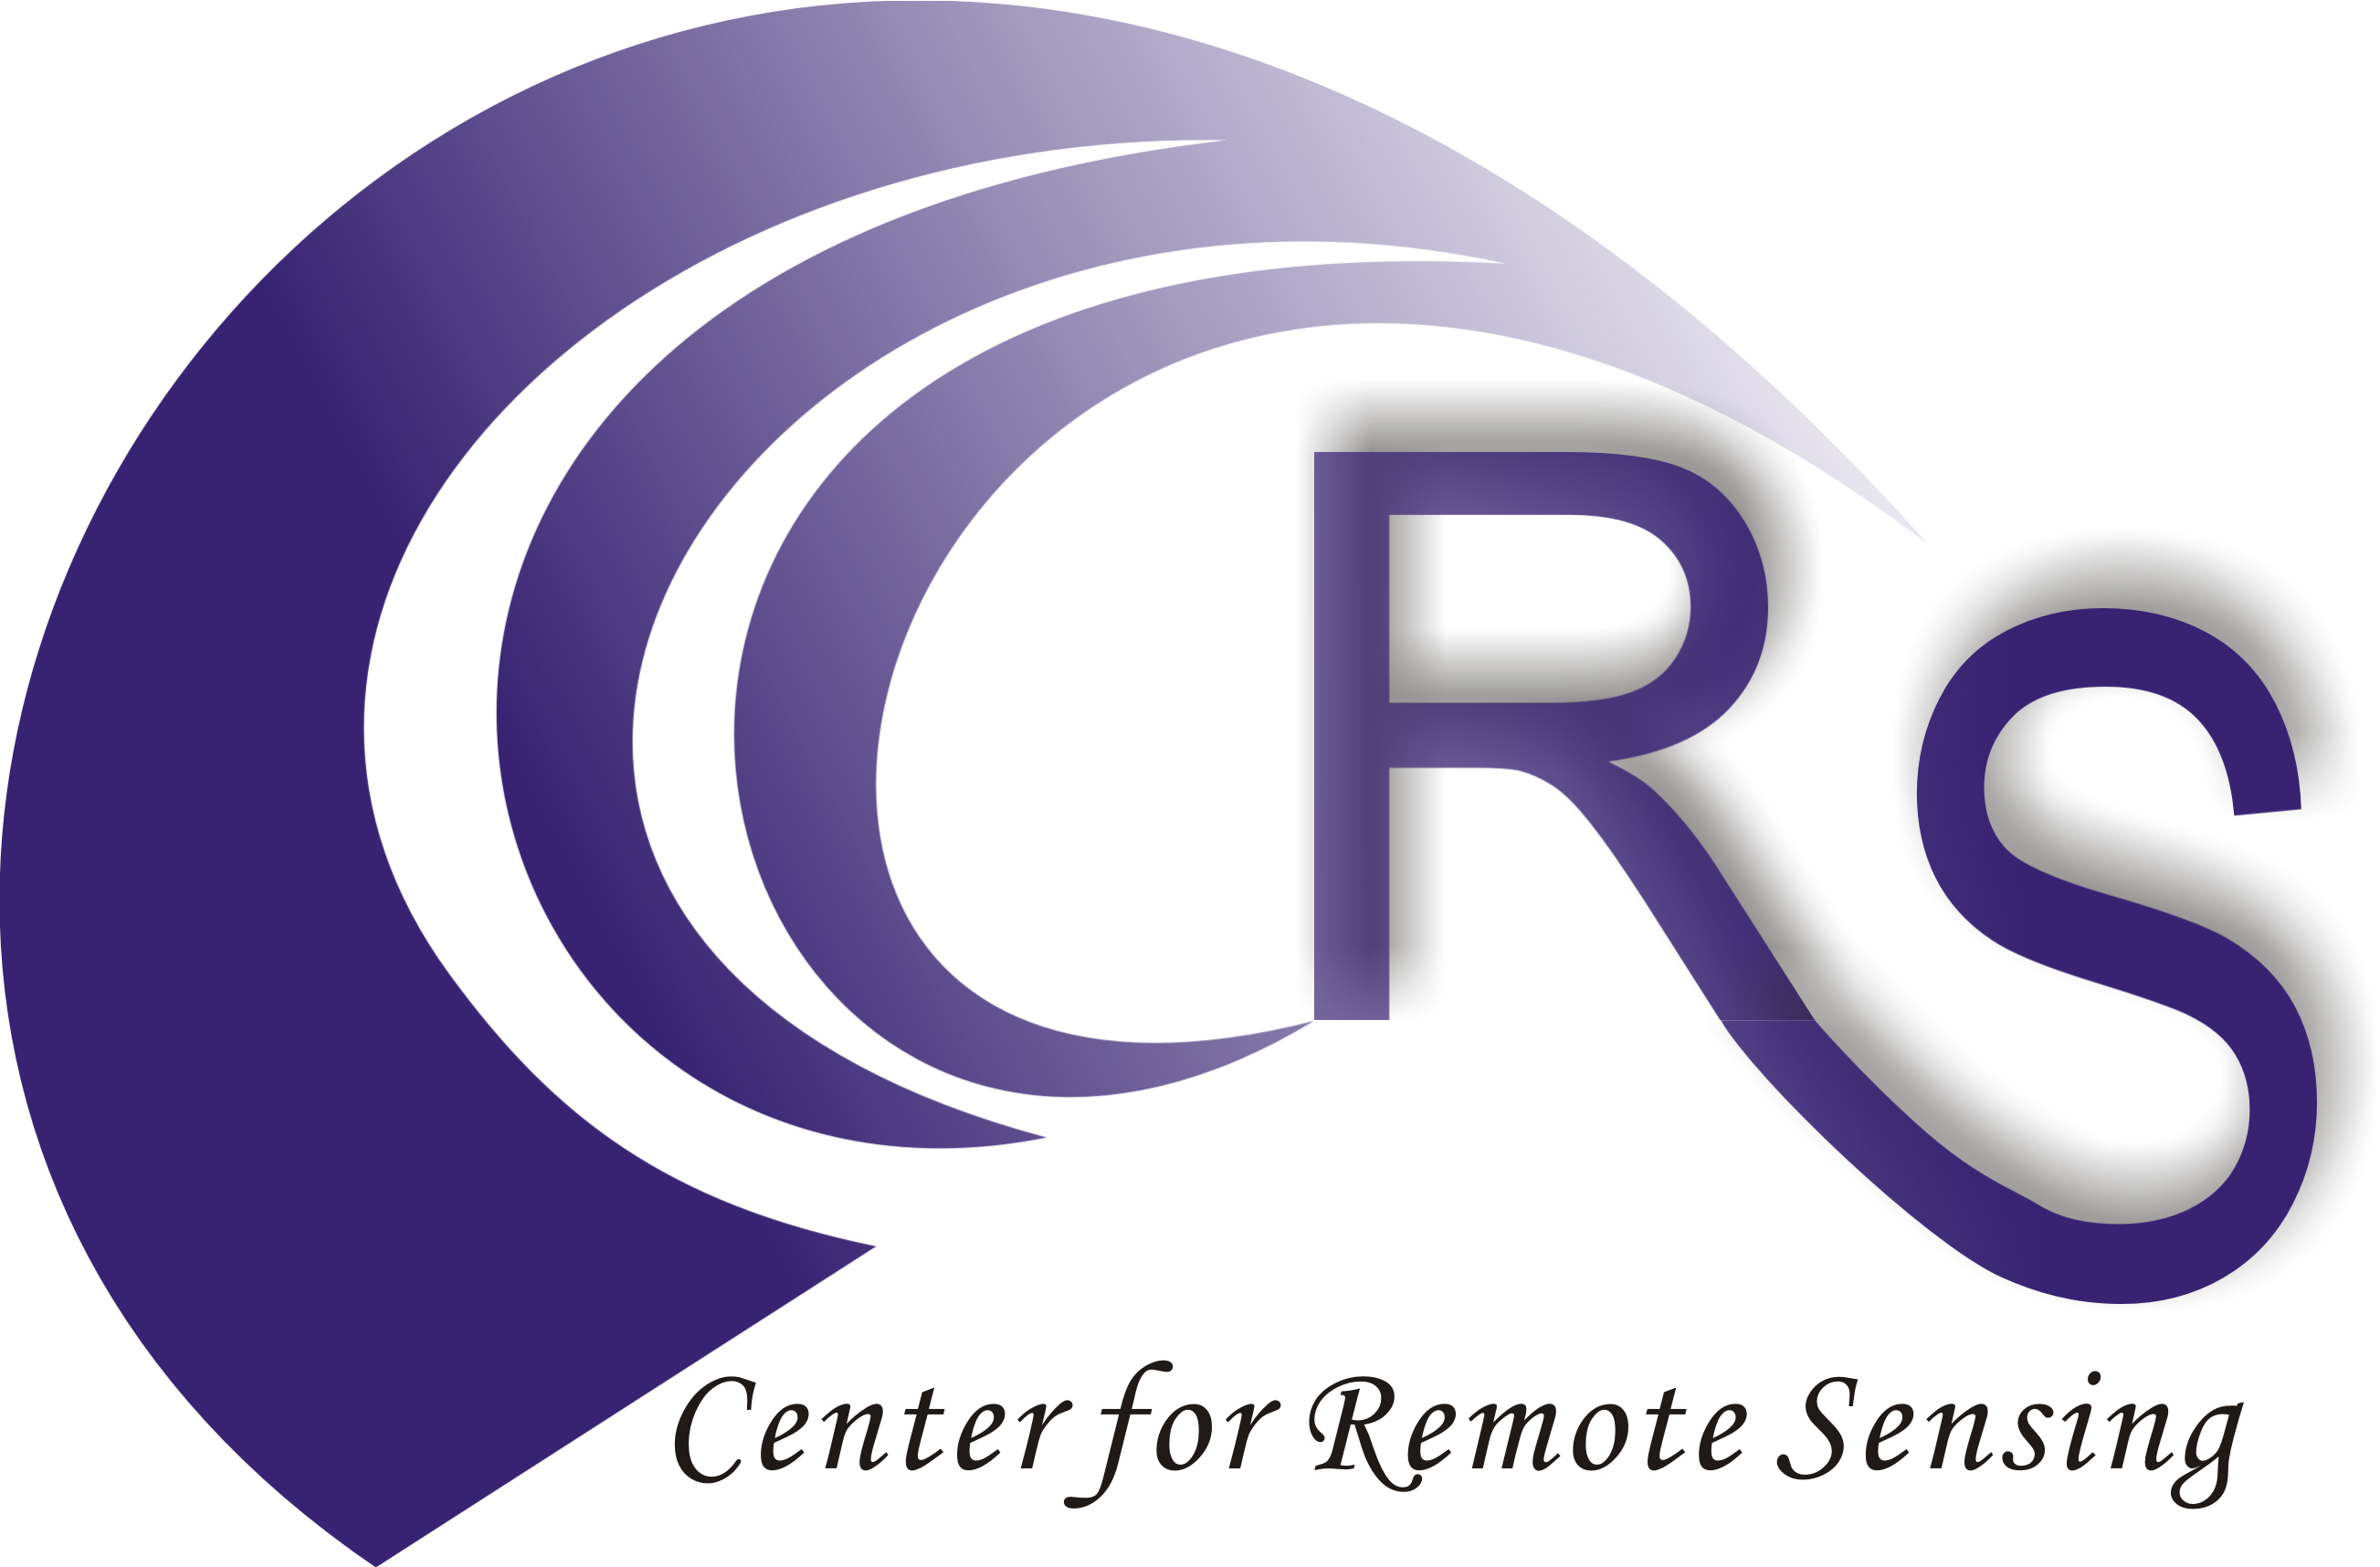 UF Center for Remote Sensing